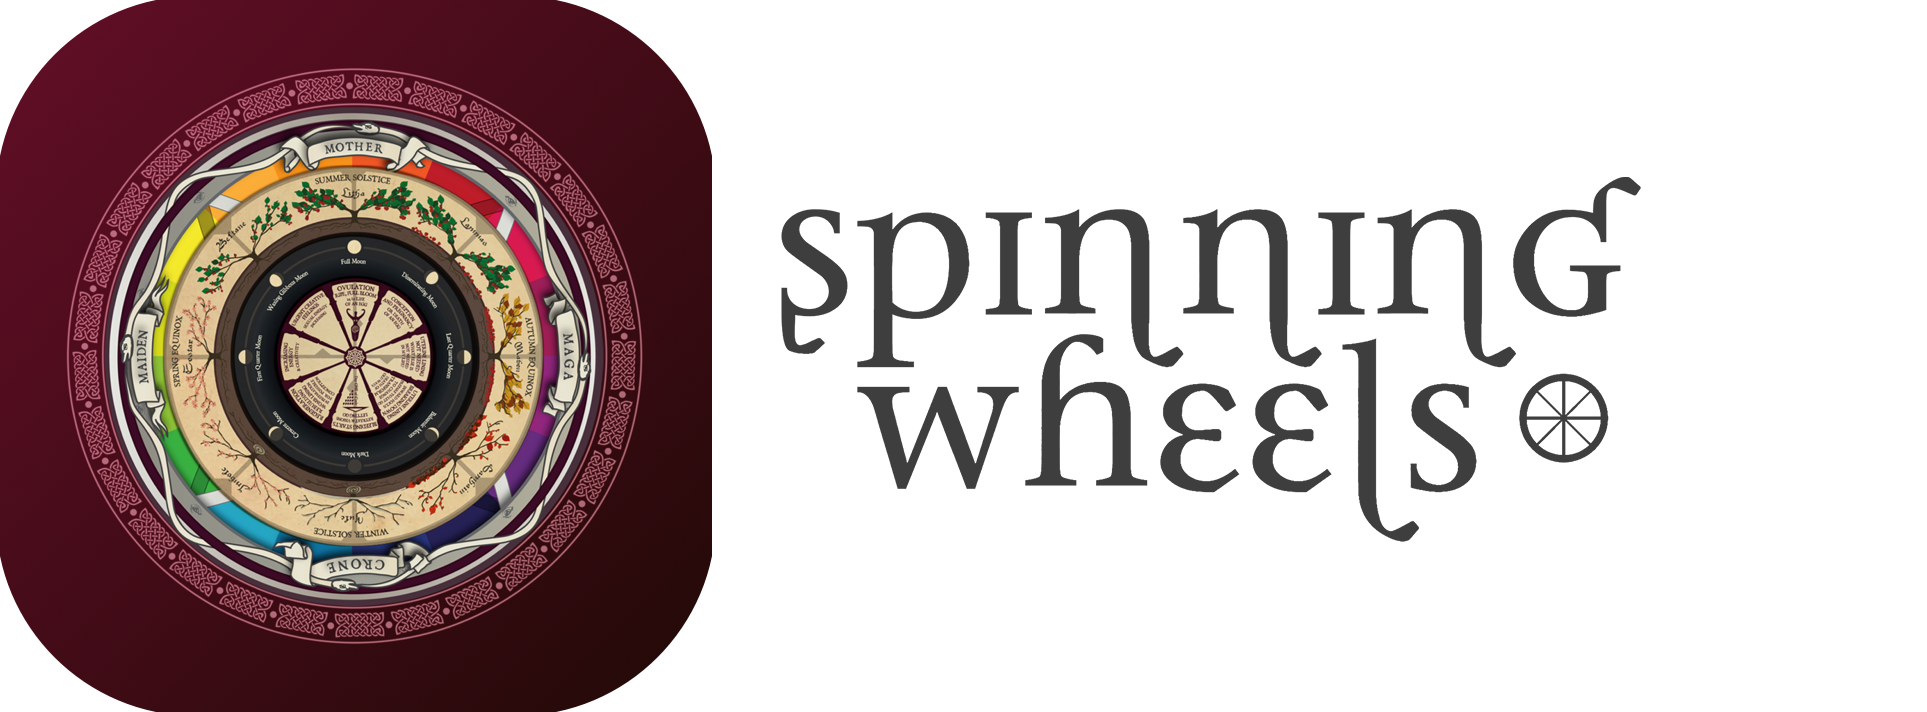 Spinning Wheels - Ovulation Calculator, Period Calculator, Period Tracker for Women’s Health & Wellbeing